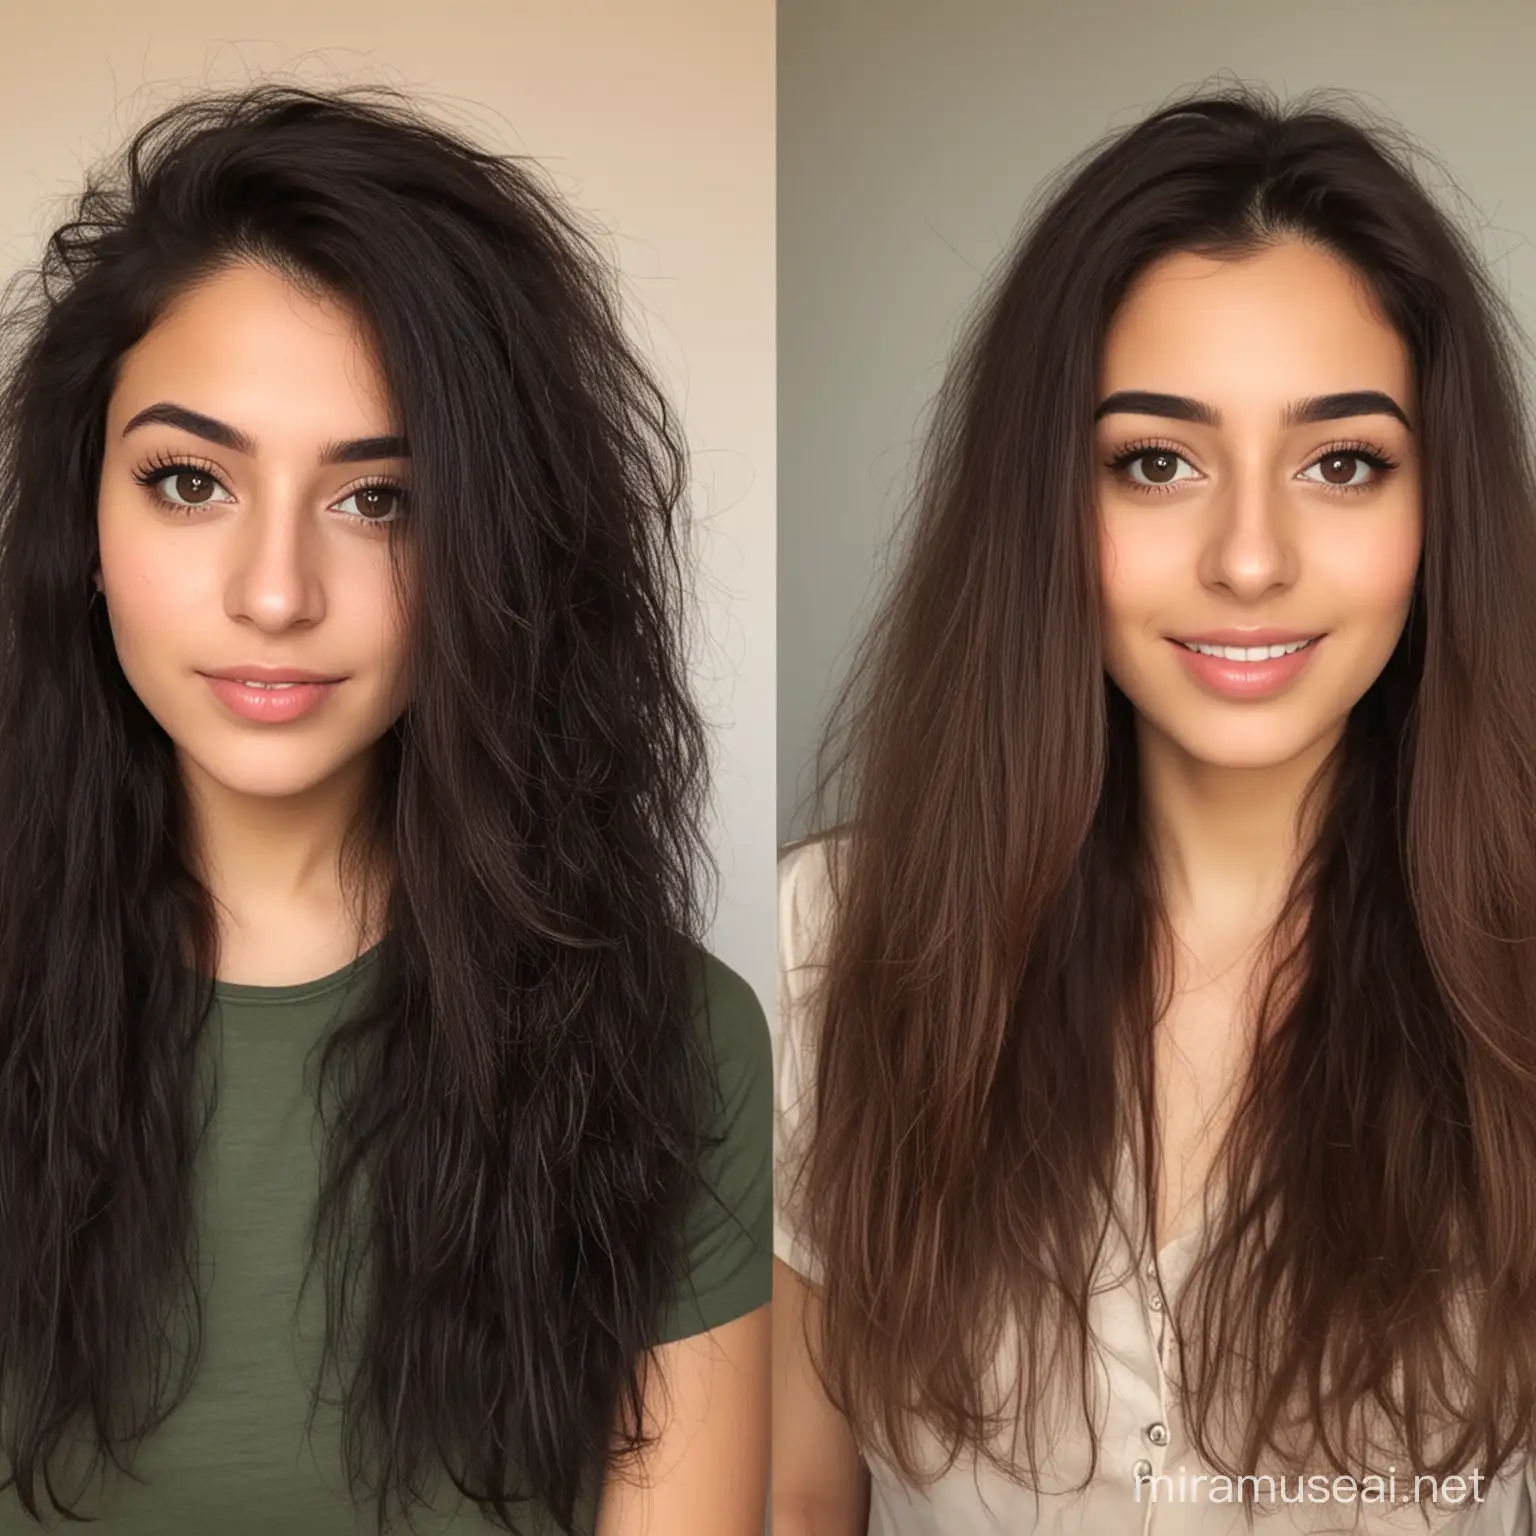 Transformation from Frizzy to Sleek Portrayal of an Arabian Girl